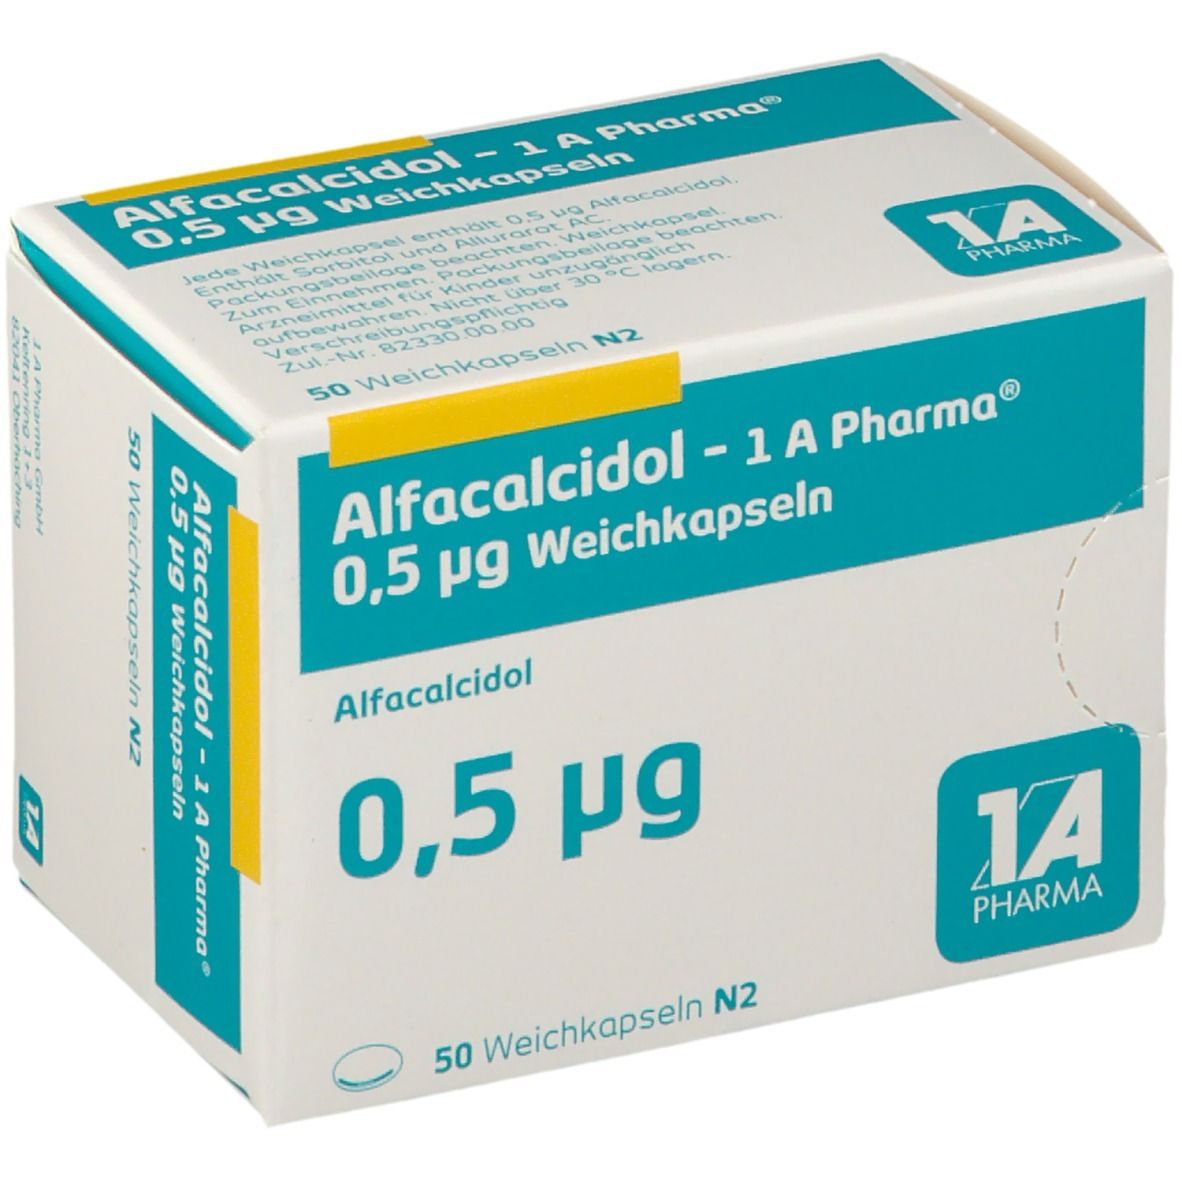 Alfacalcidol - 1 A Pharma® 0,5 µg